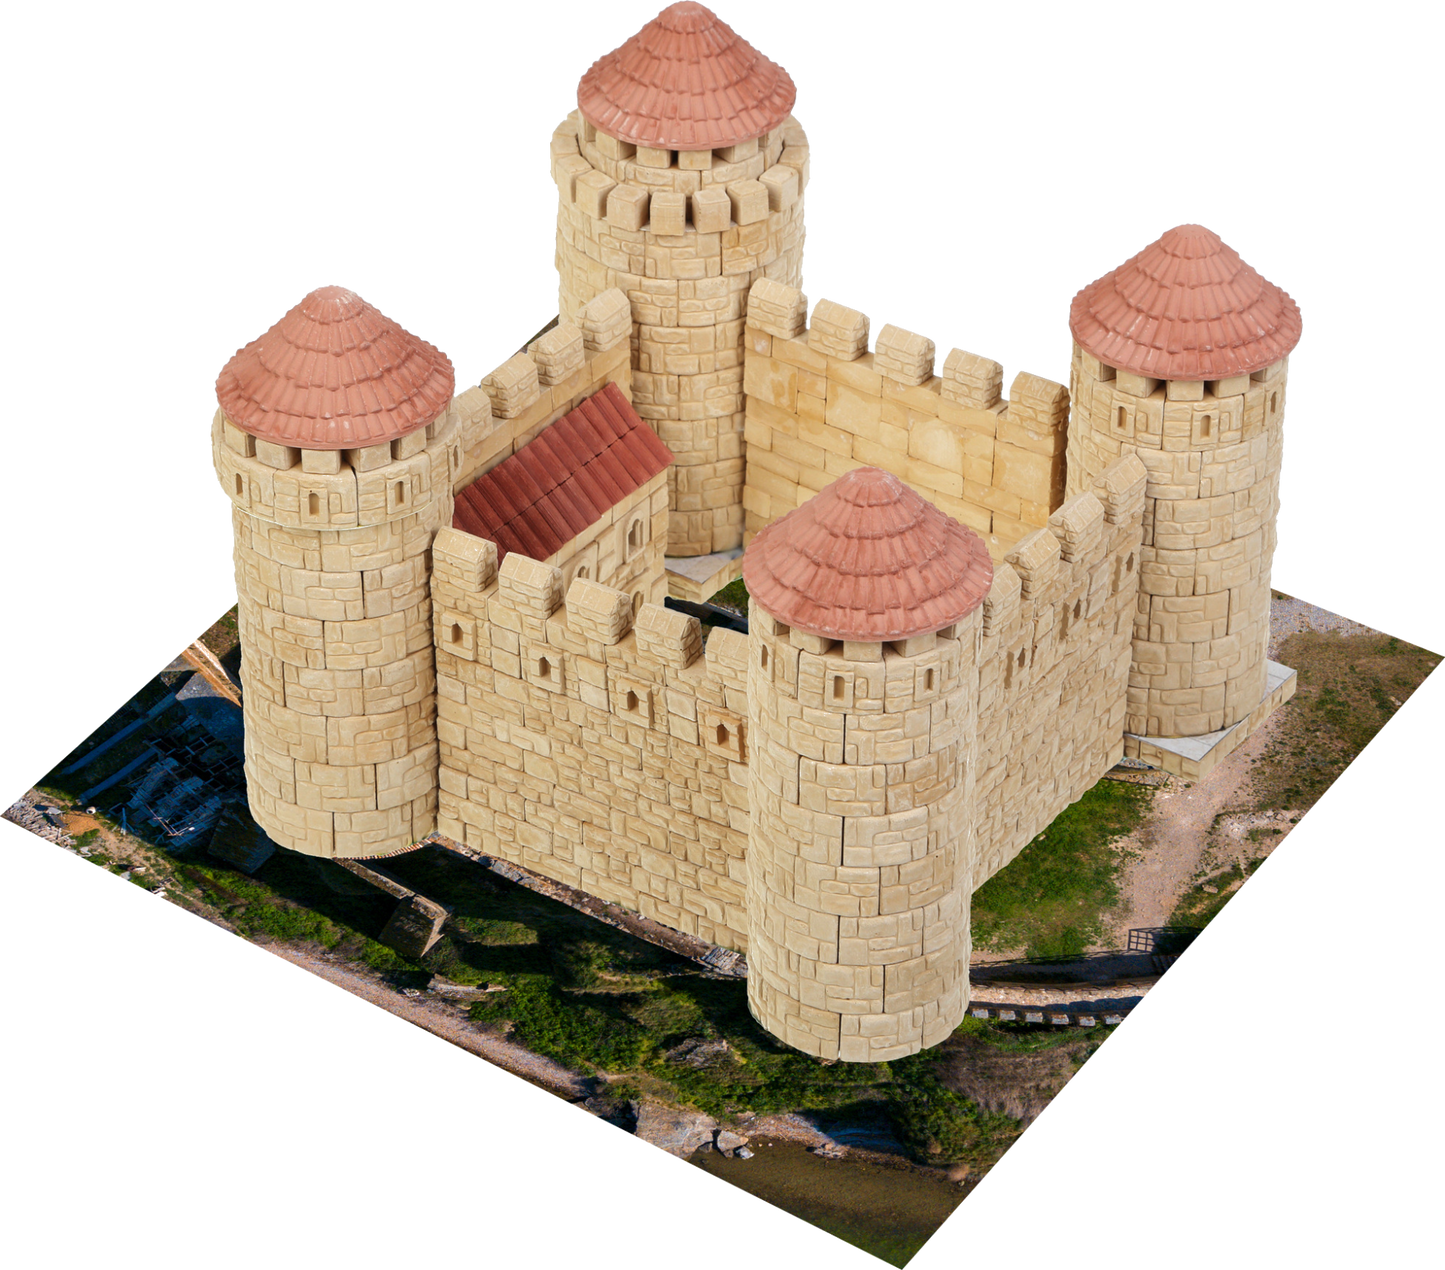 Mini Bricks Construction Set - Ottoman Castle